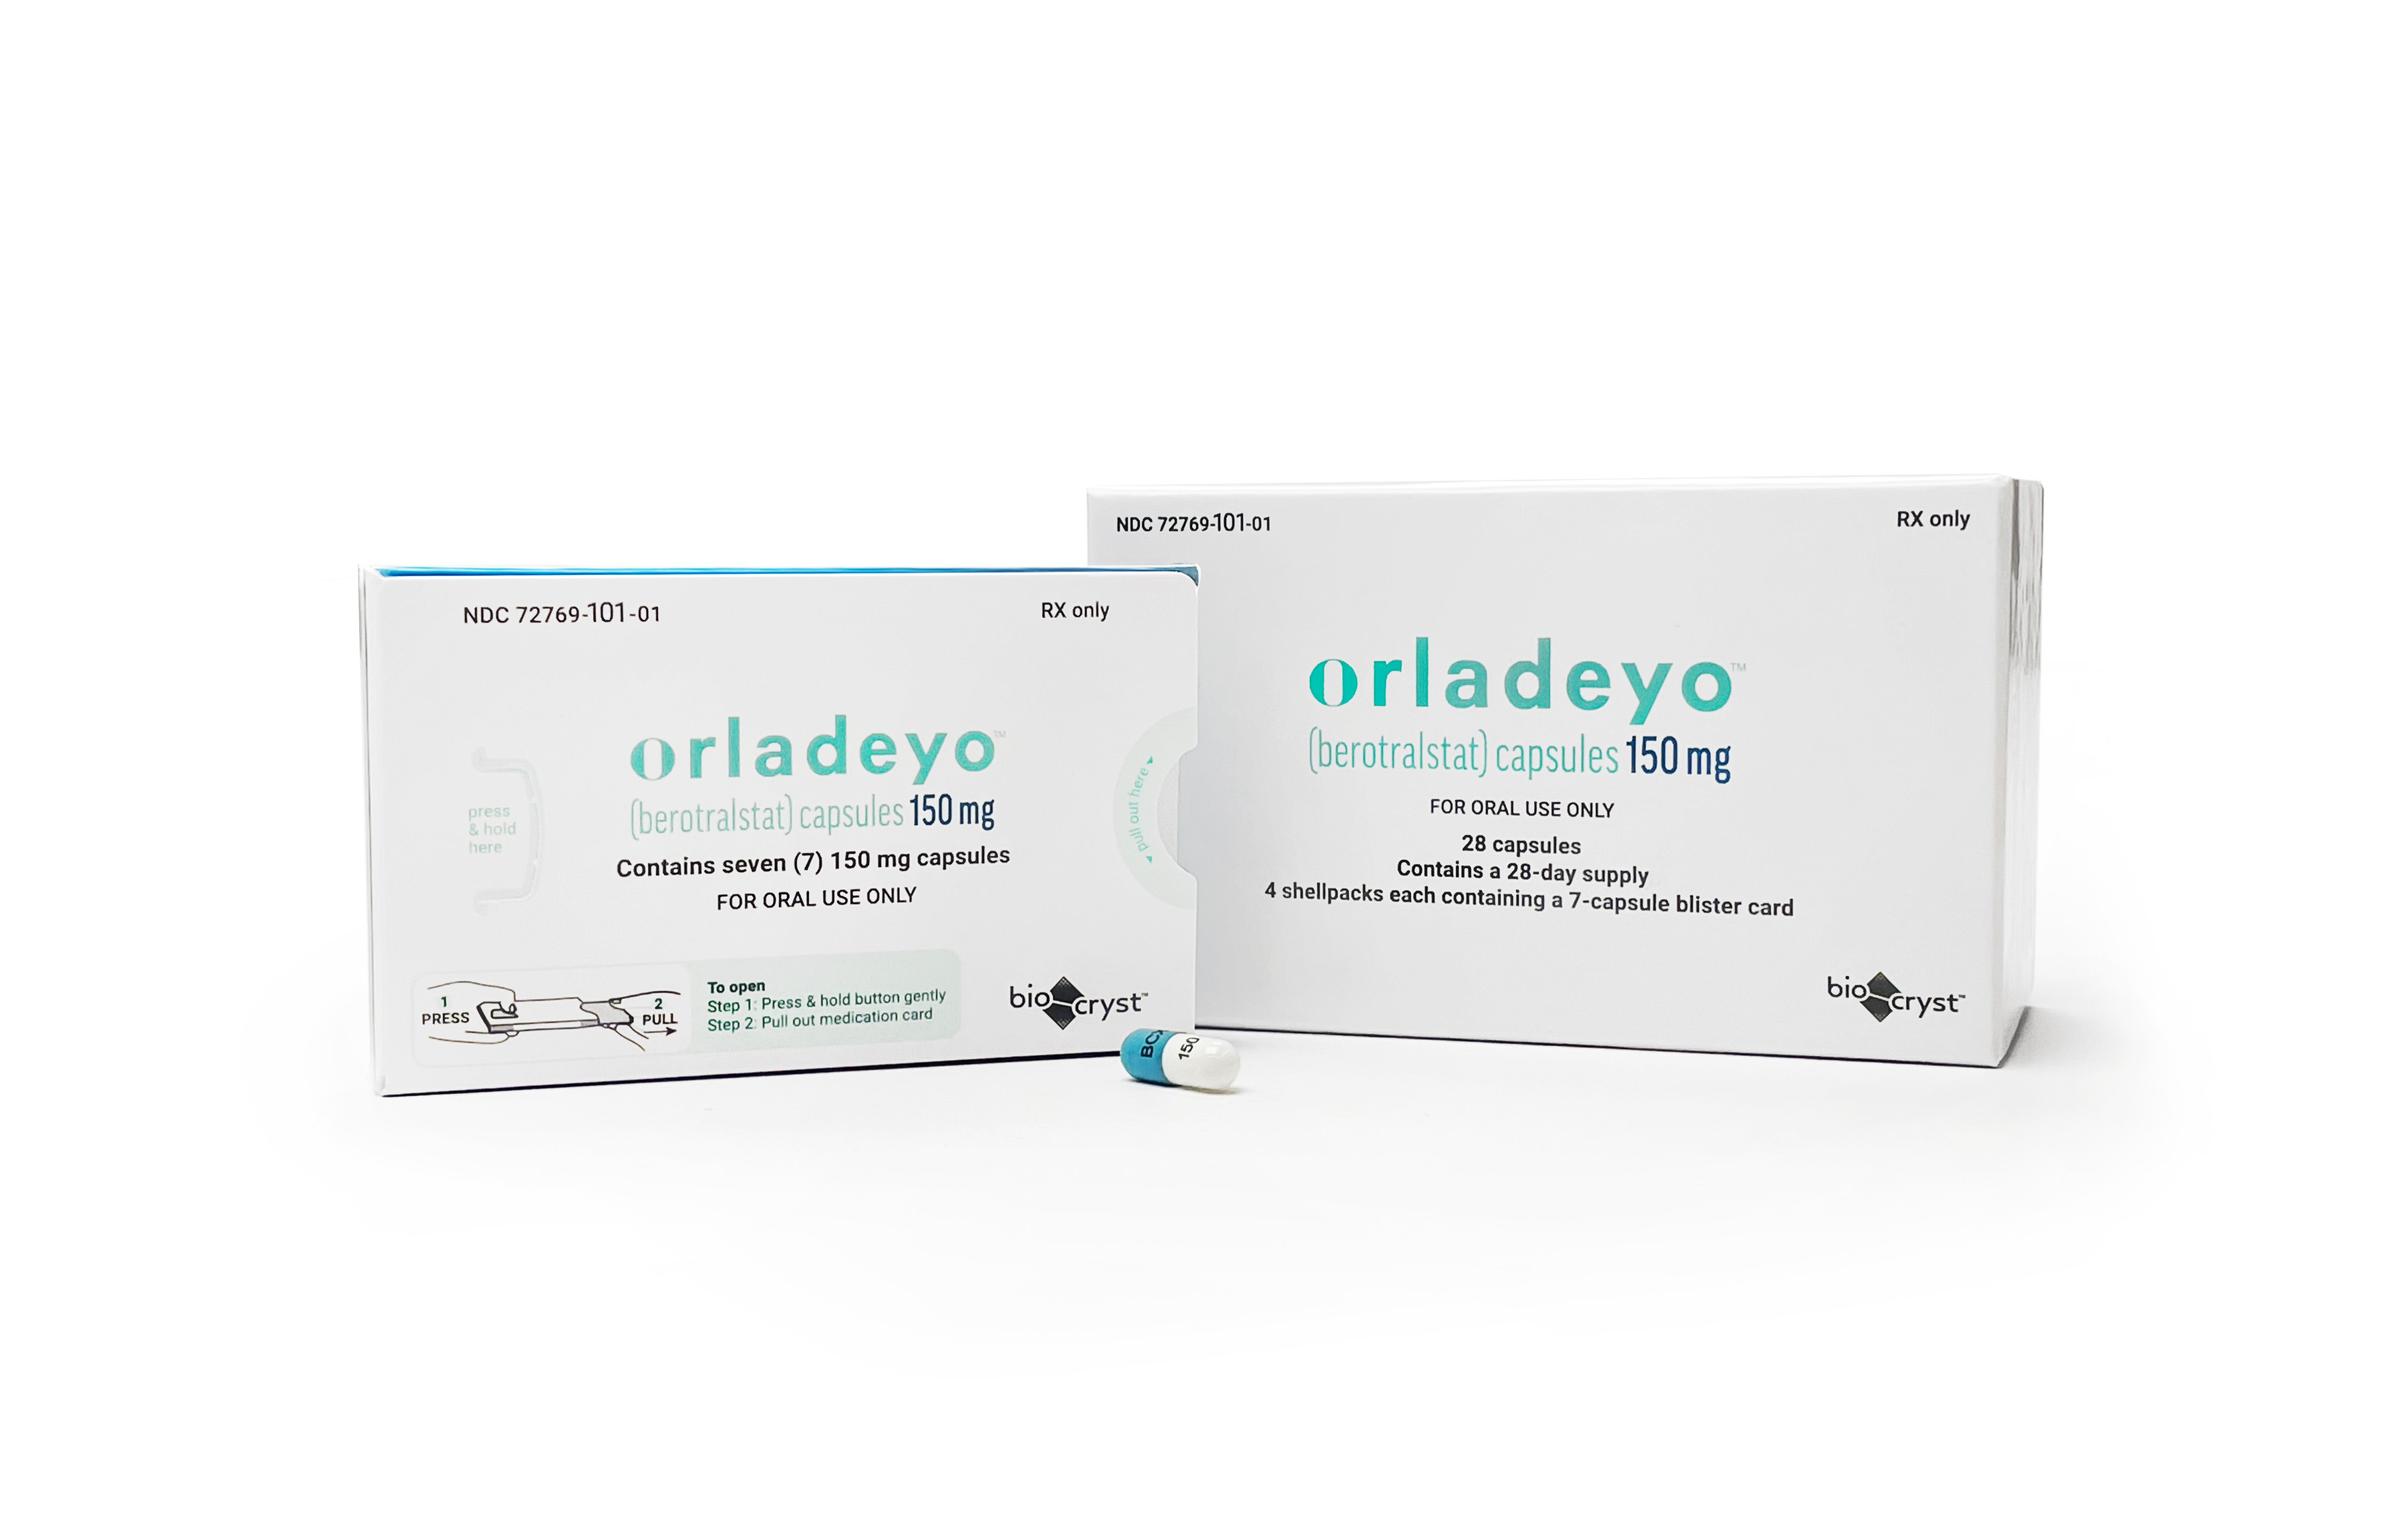 BioCryst Orladeyo packaging to treat HAE